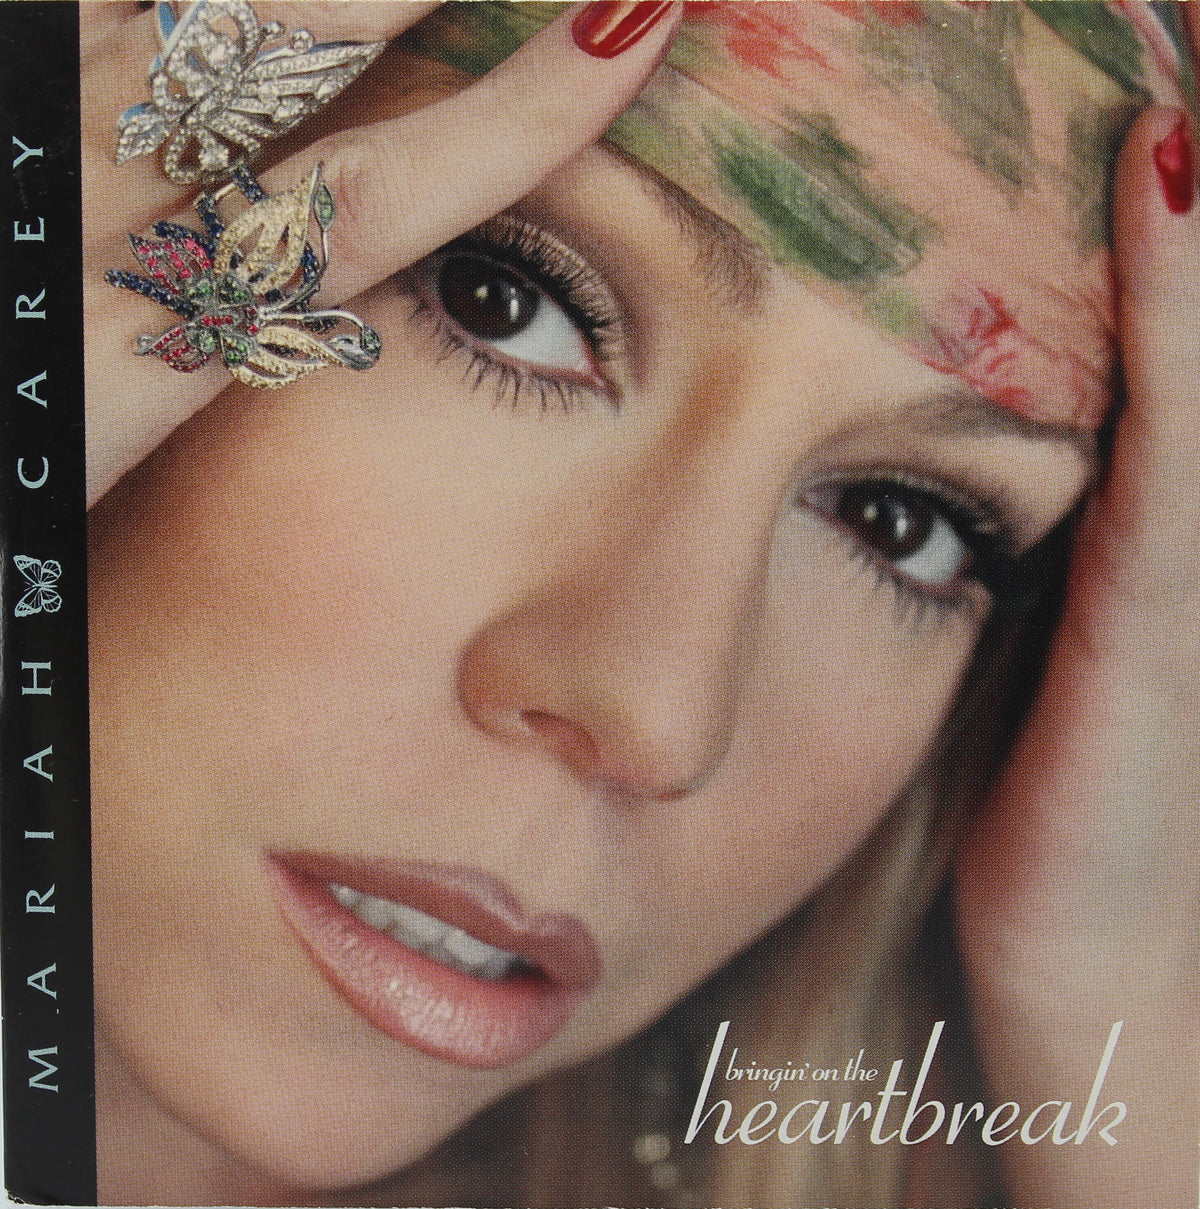 Mariah Carey, Bringin&#39; On The Heartbreak, CD Single, Europe 2003 (CD 633)